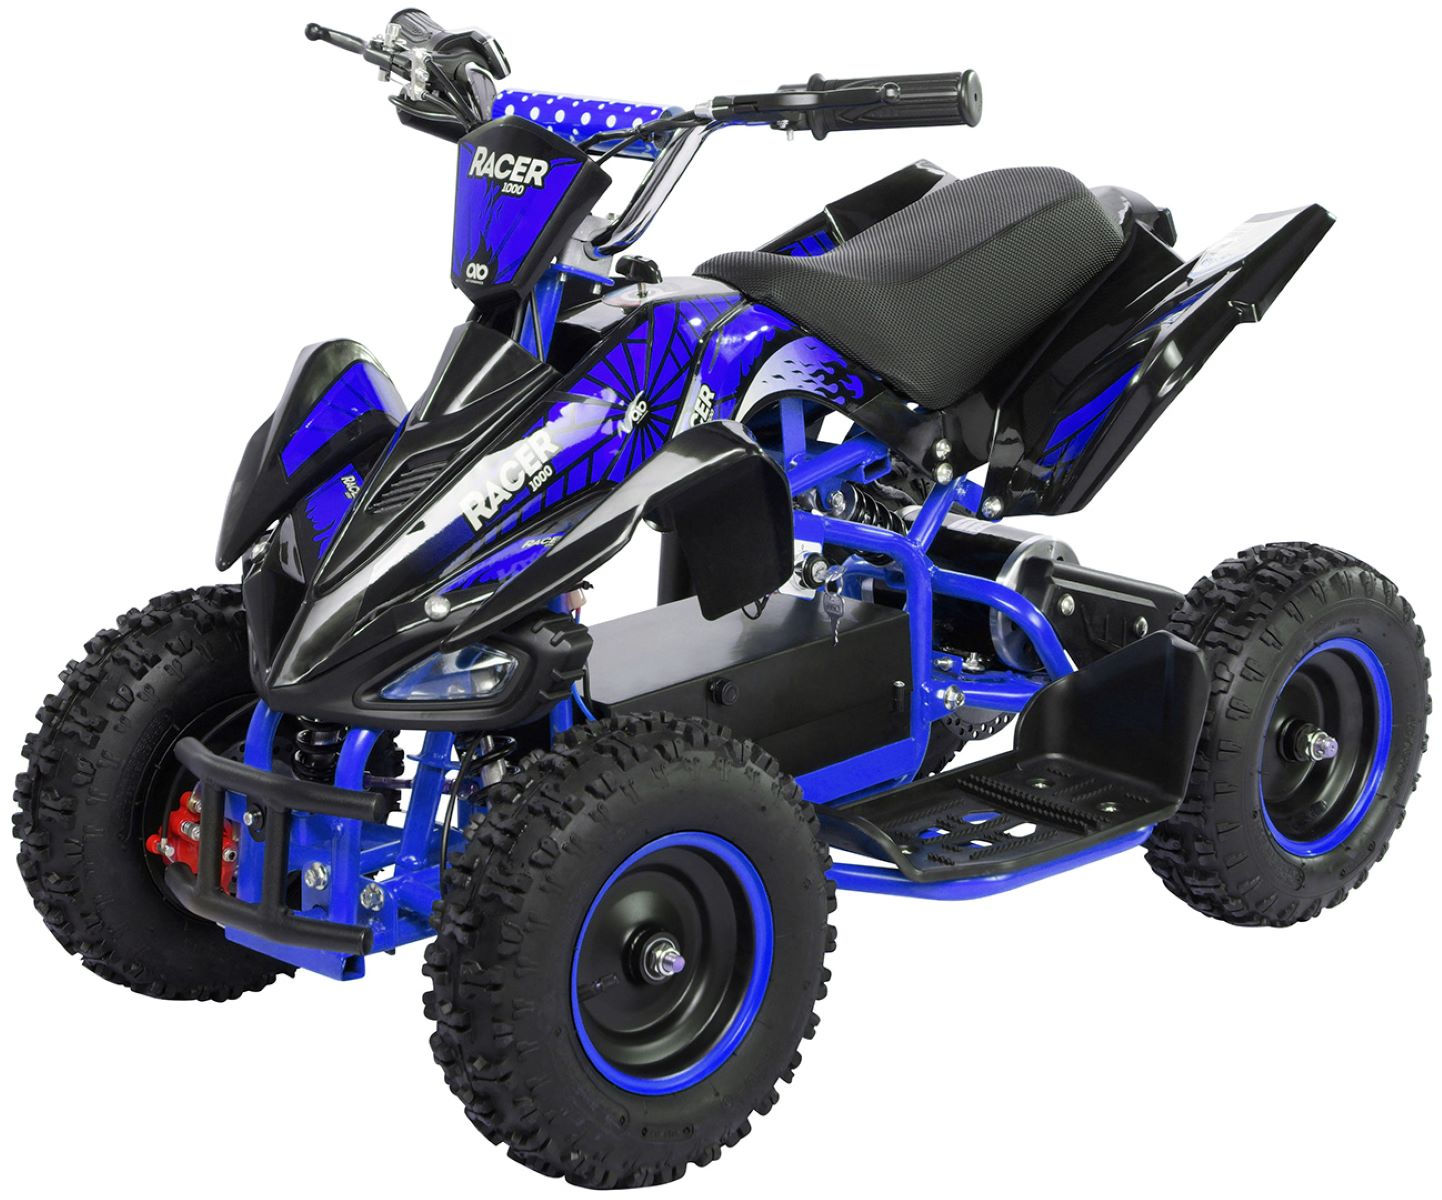 ATV ACTIONBIKES Elektroquad MOTORS Schwarz/Blau Racer